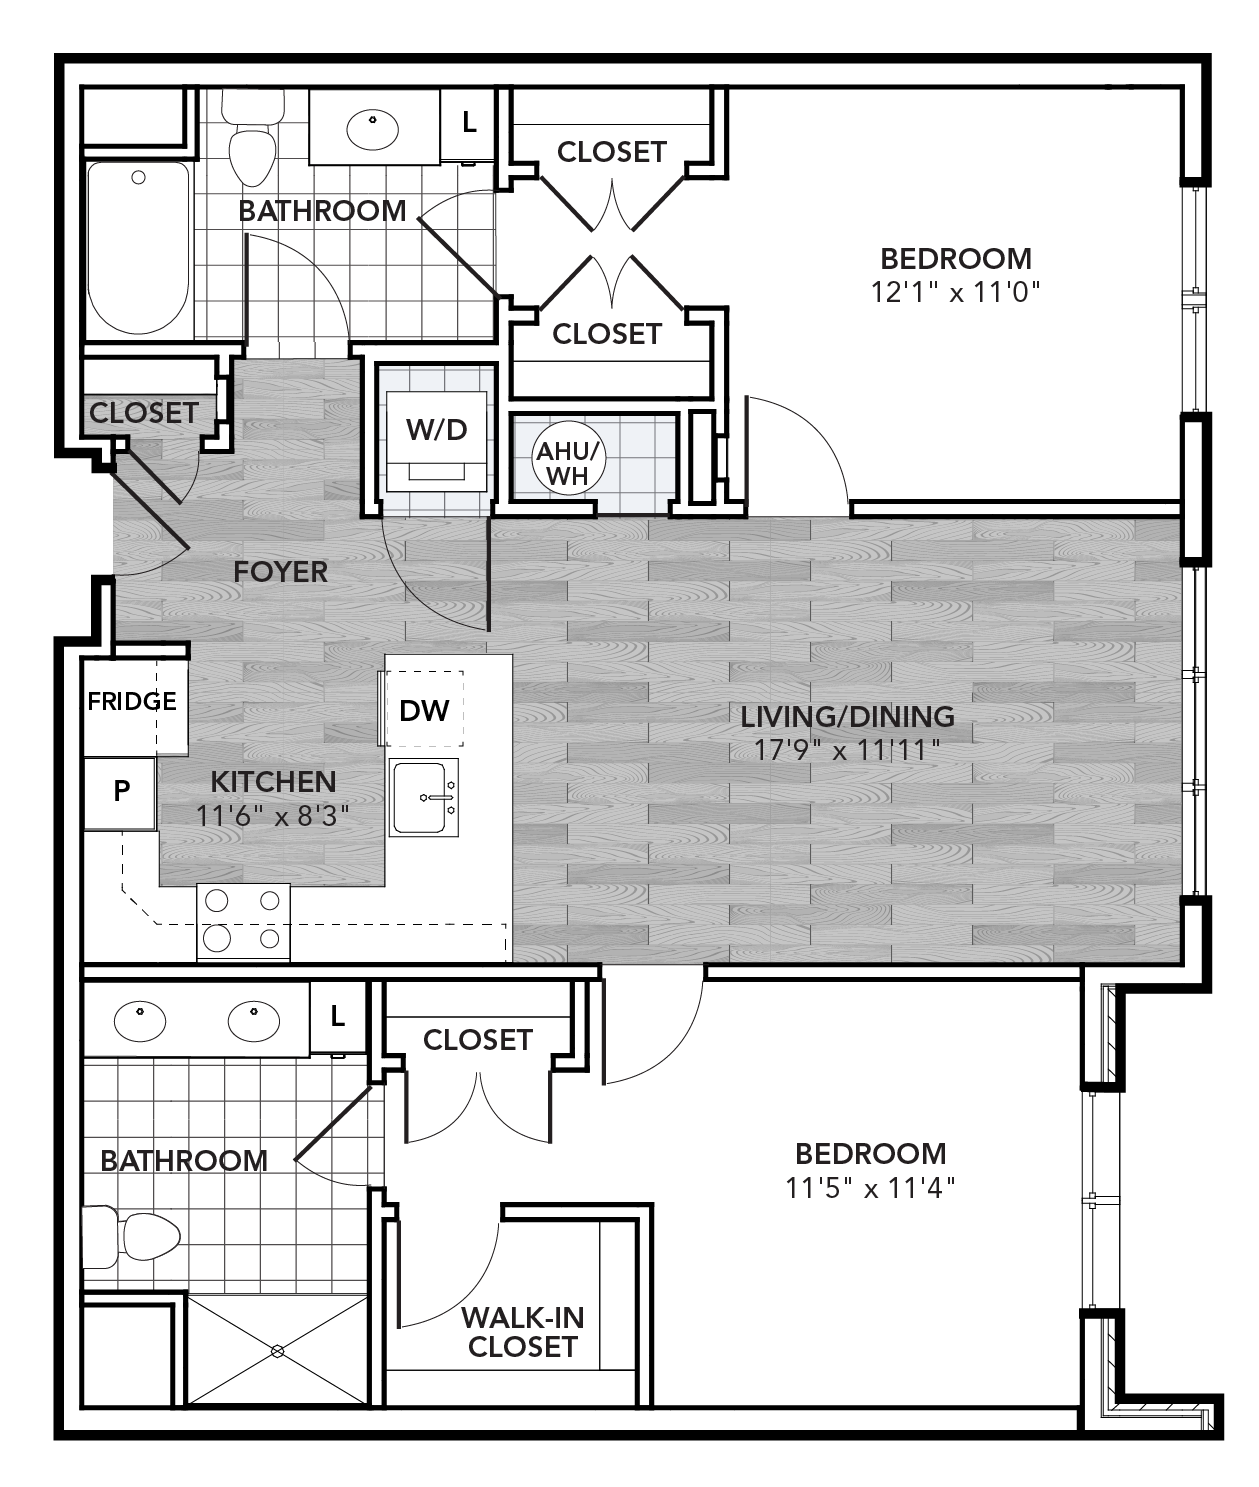 floor plan image unit id 145